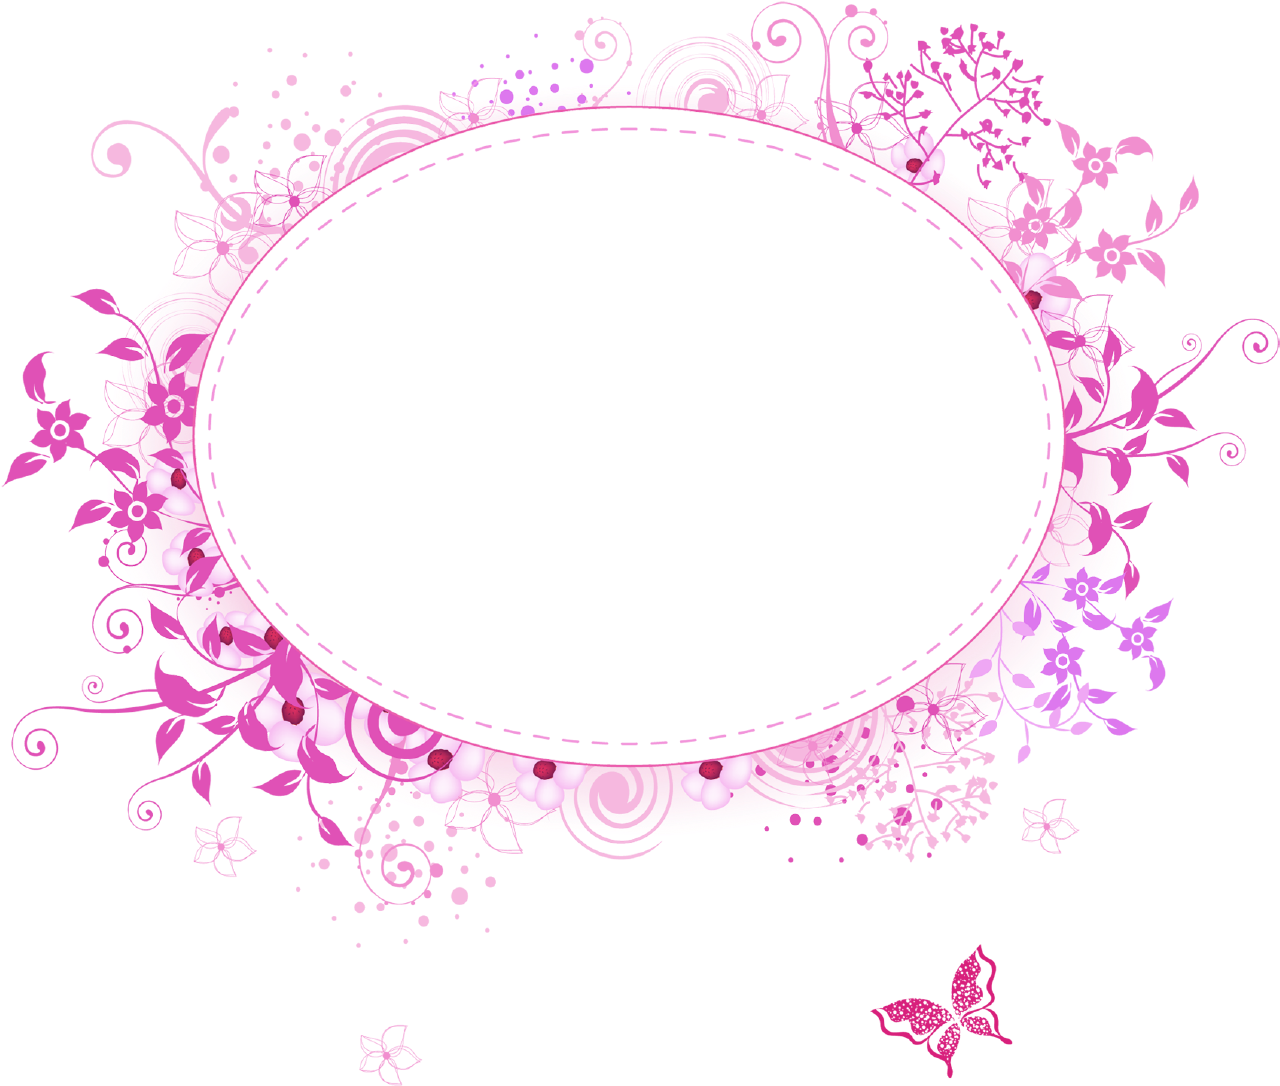 A Black And Pink Floral Frame